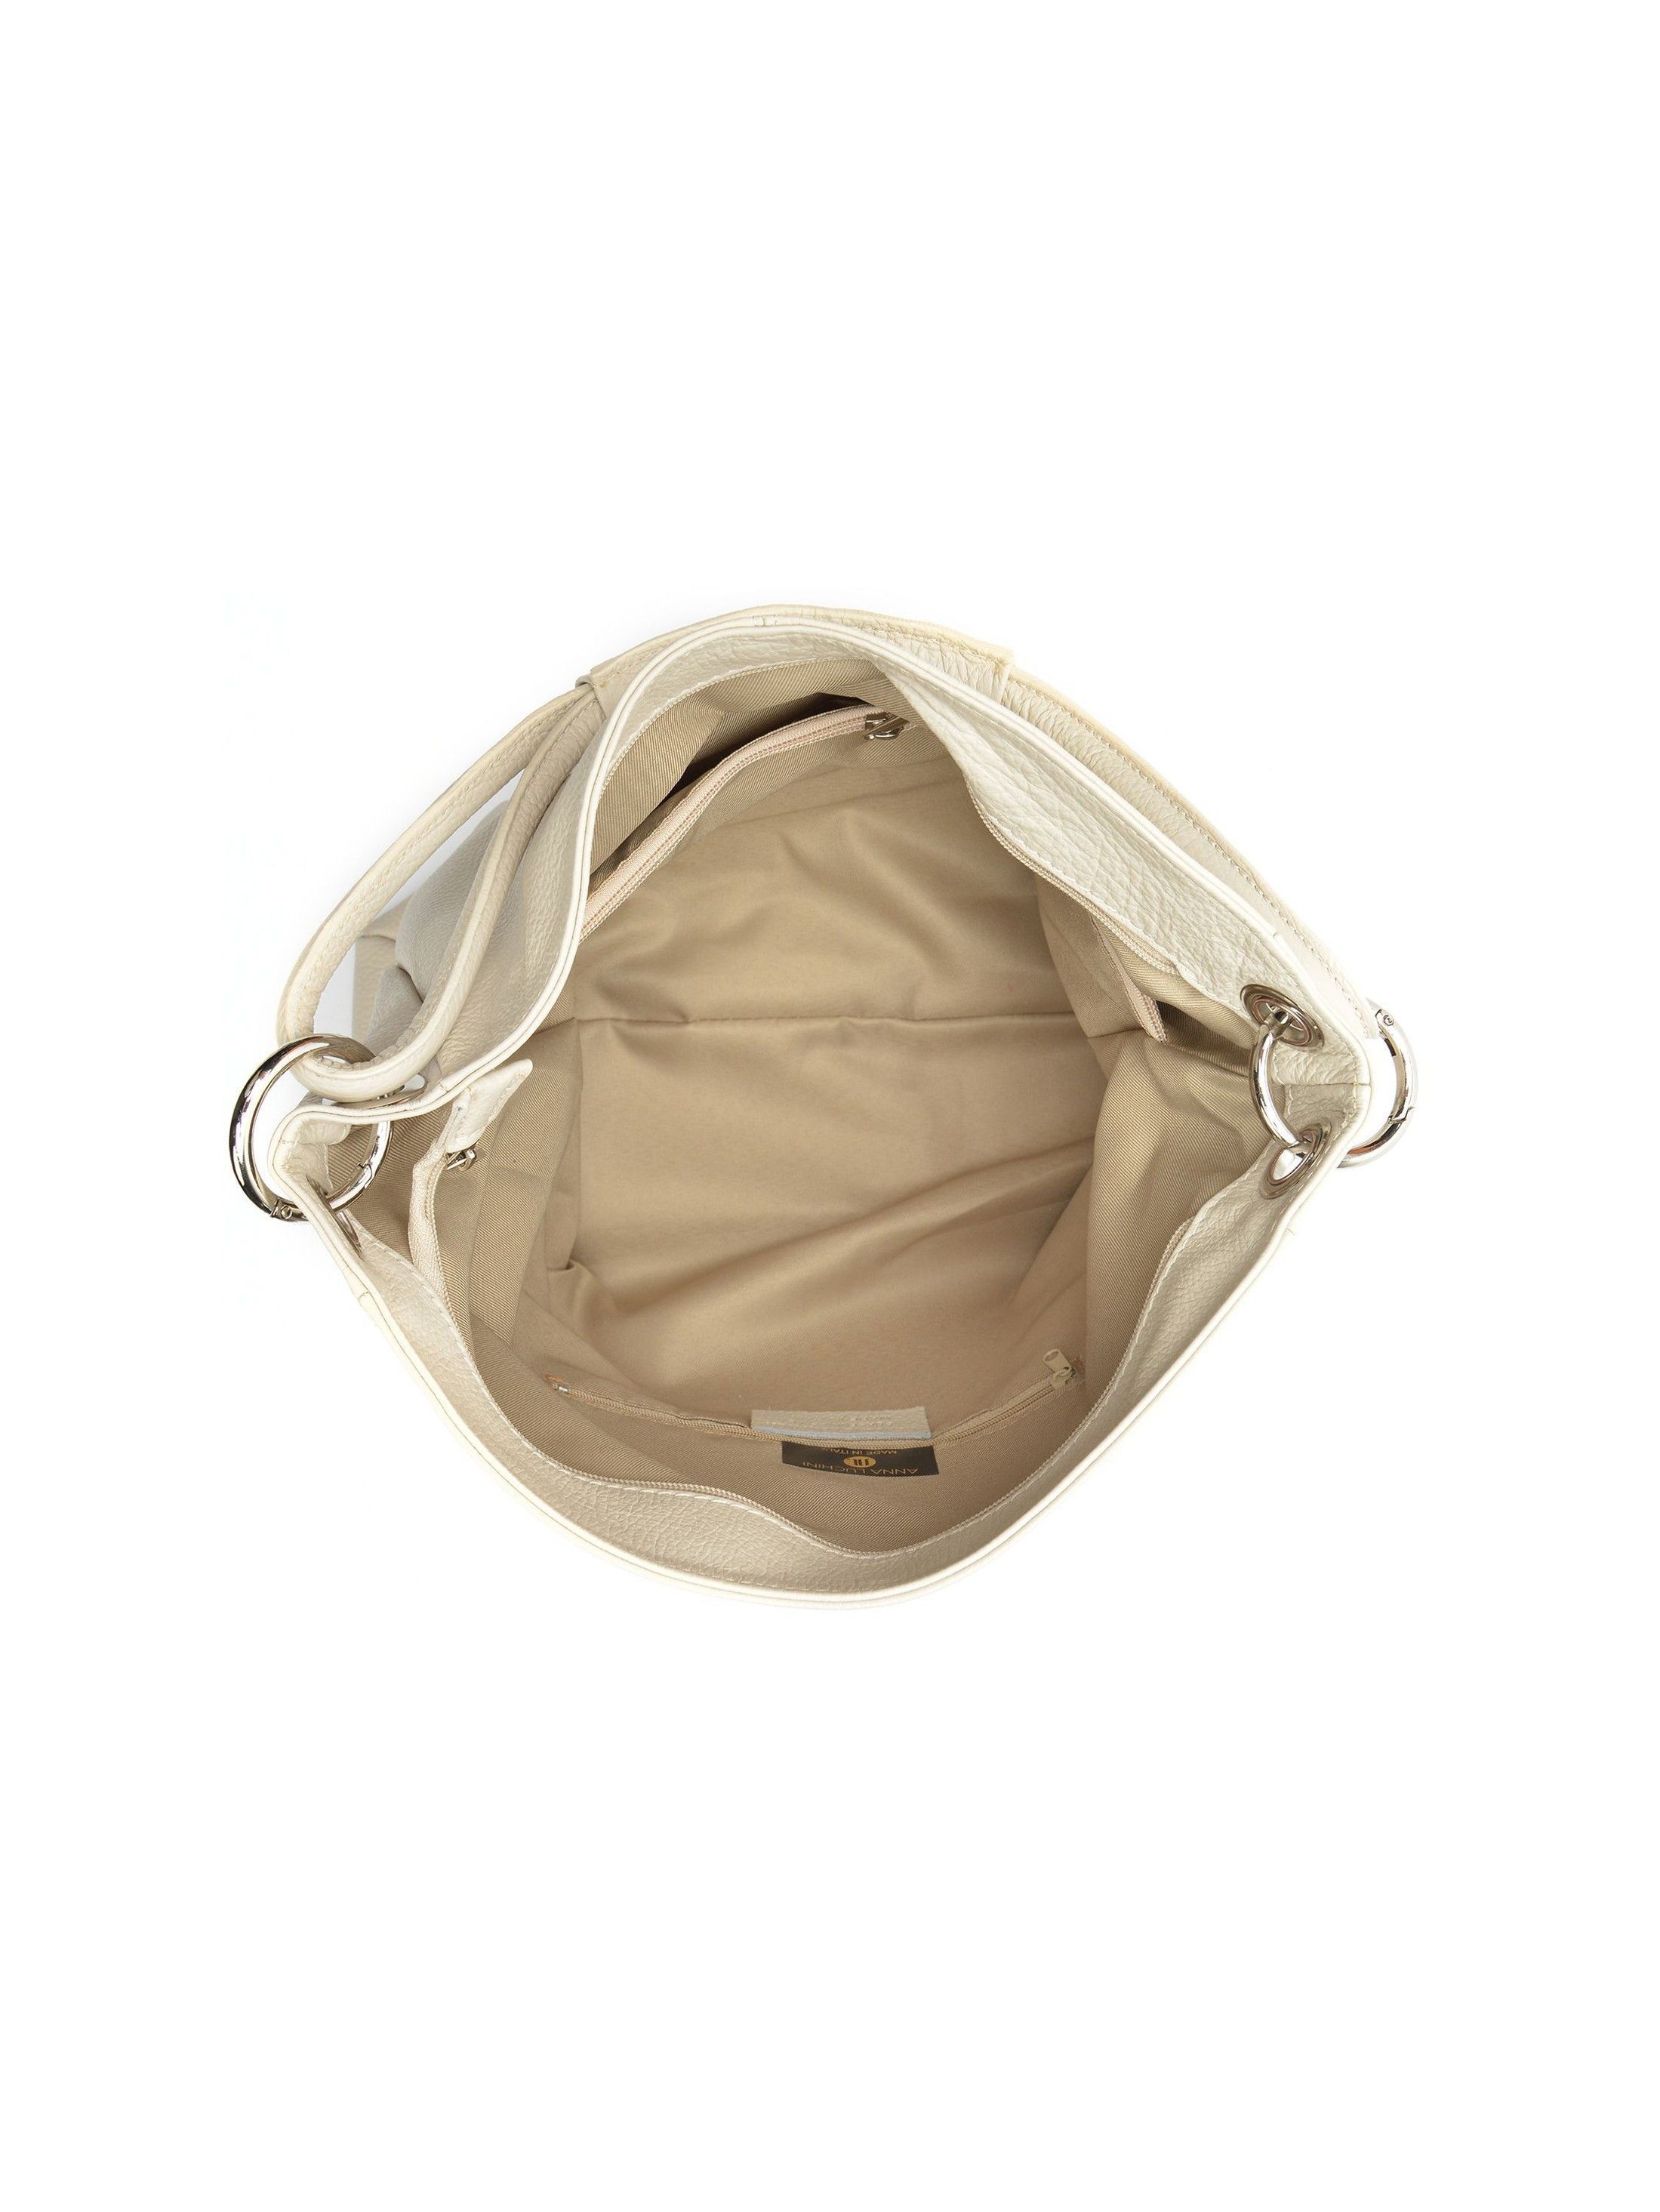 Top Handle Bag
100% cow leather
Single top handle: 50 cm 
Top zip closure
Interior organizing zip pocket
Back zip pocket
Tassel accents
Dimensions (M): 33x46x13.5 cm